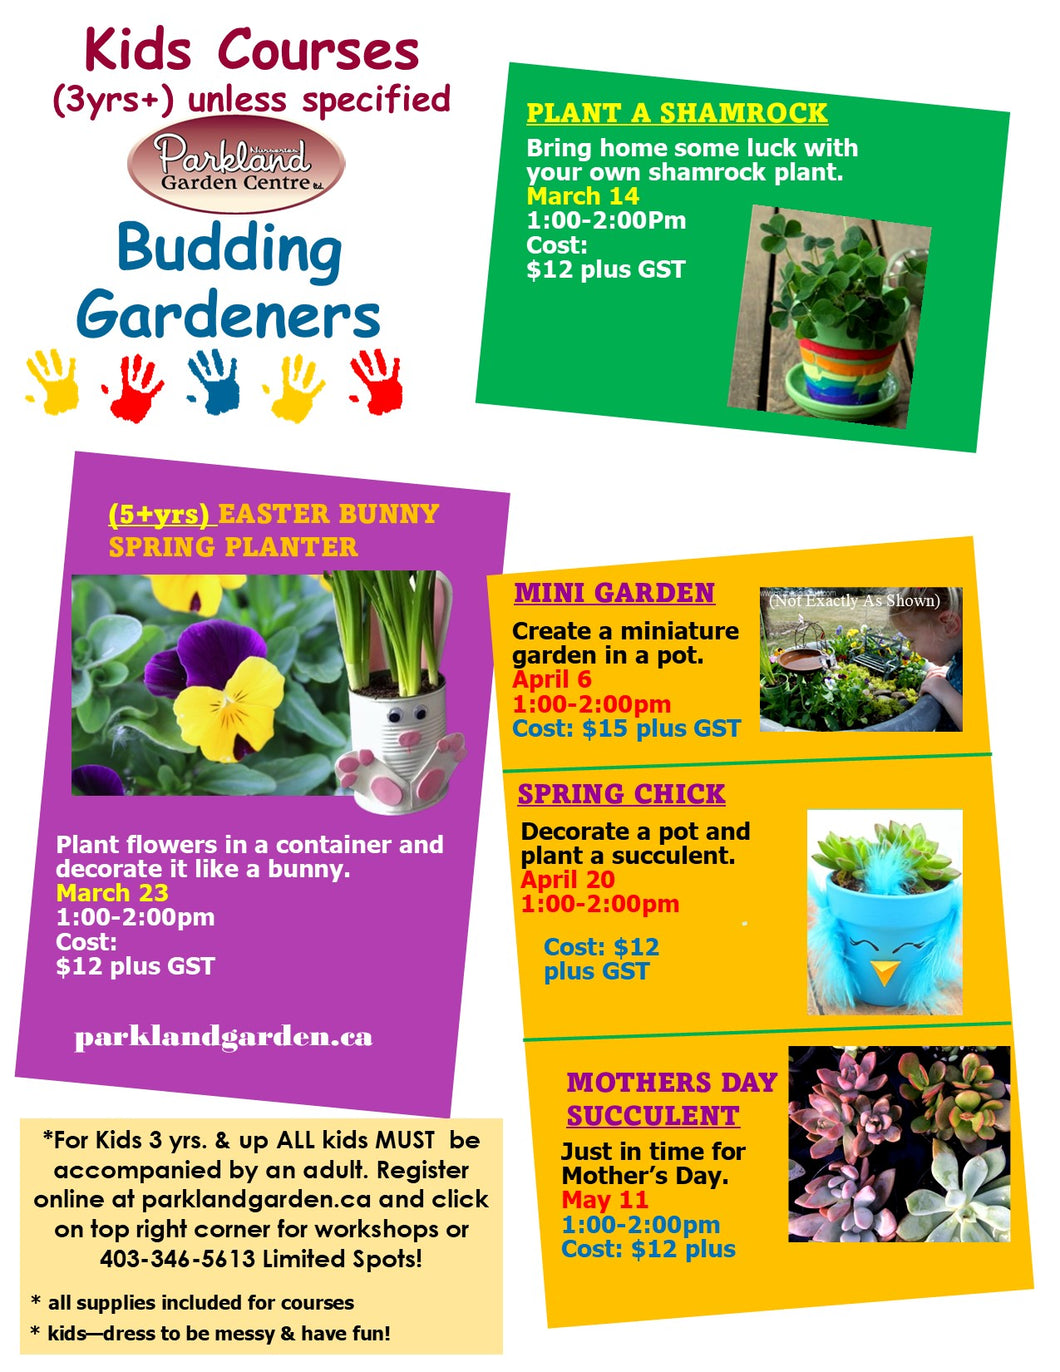 KIDS Mini Garden - Saturday, April 6 - 1 to 2pm